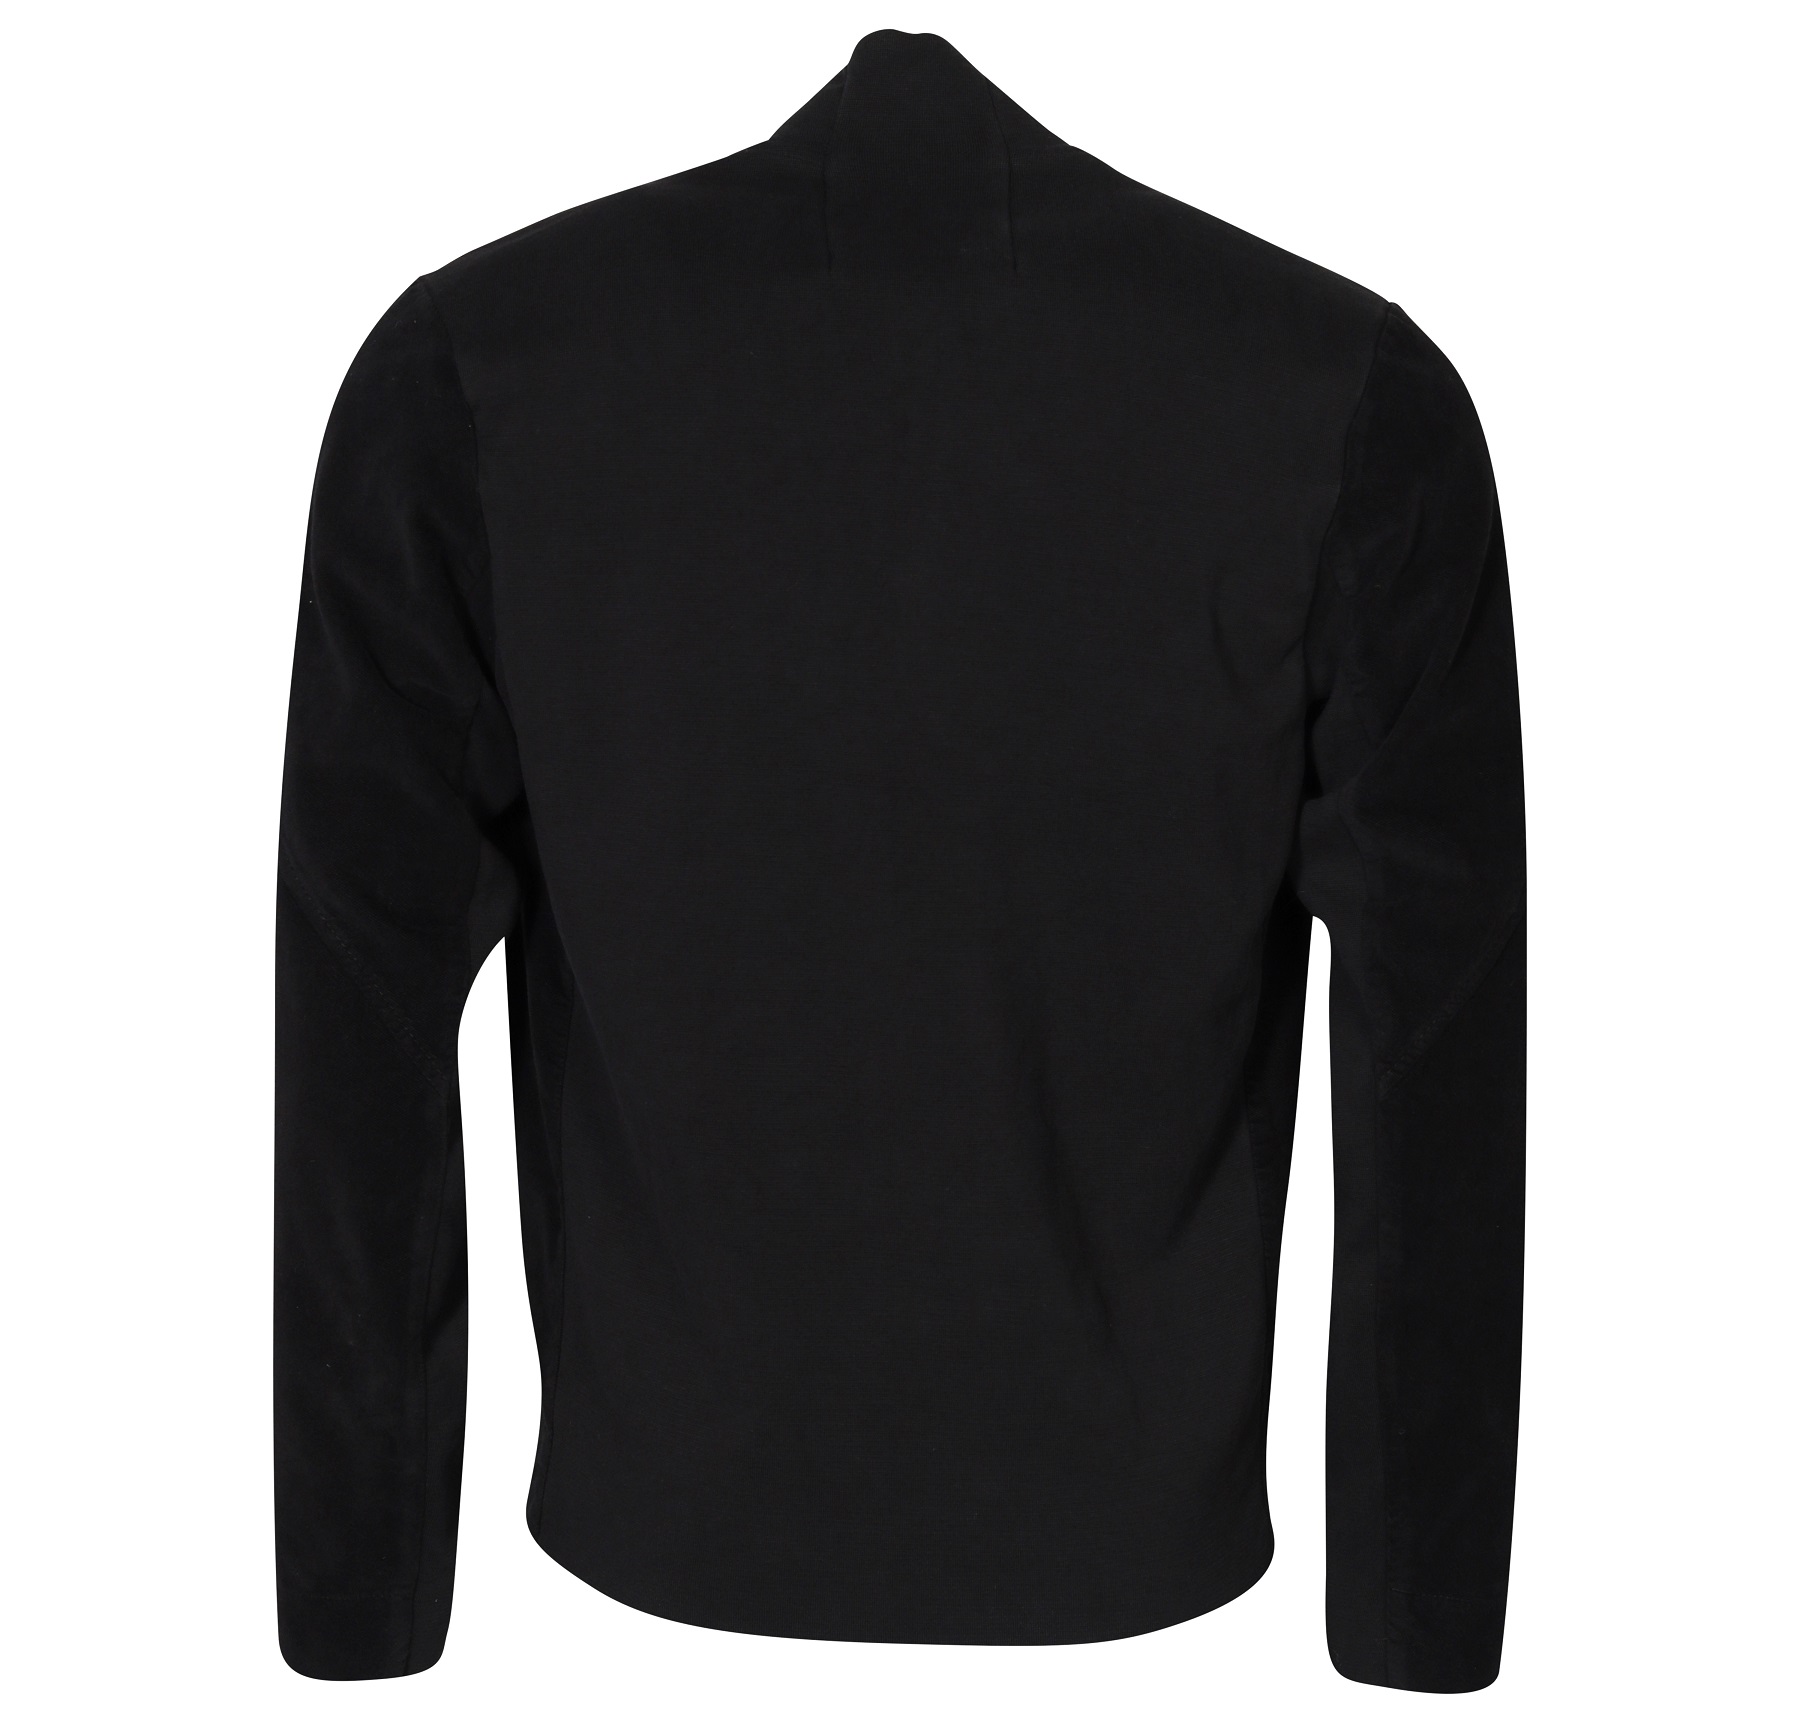 TRANSIT UOMO Cotton Stretch Jacket in Black S